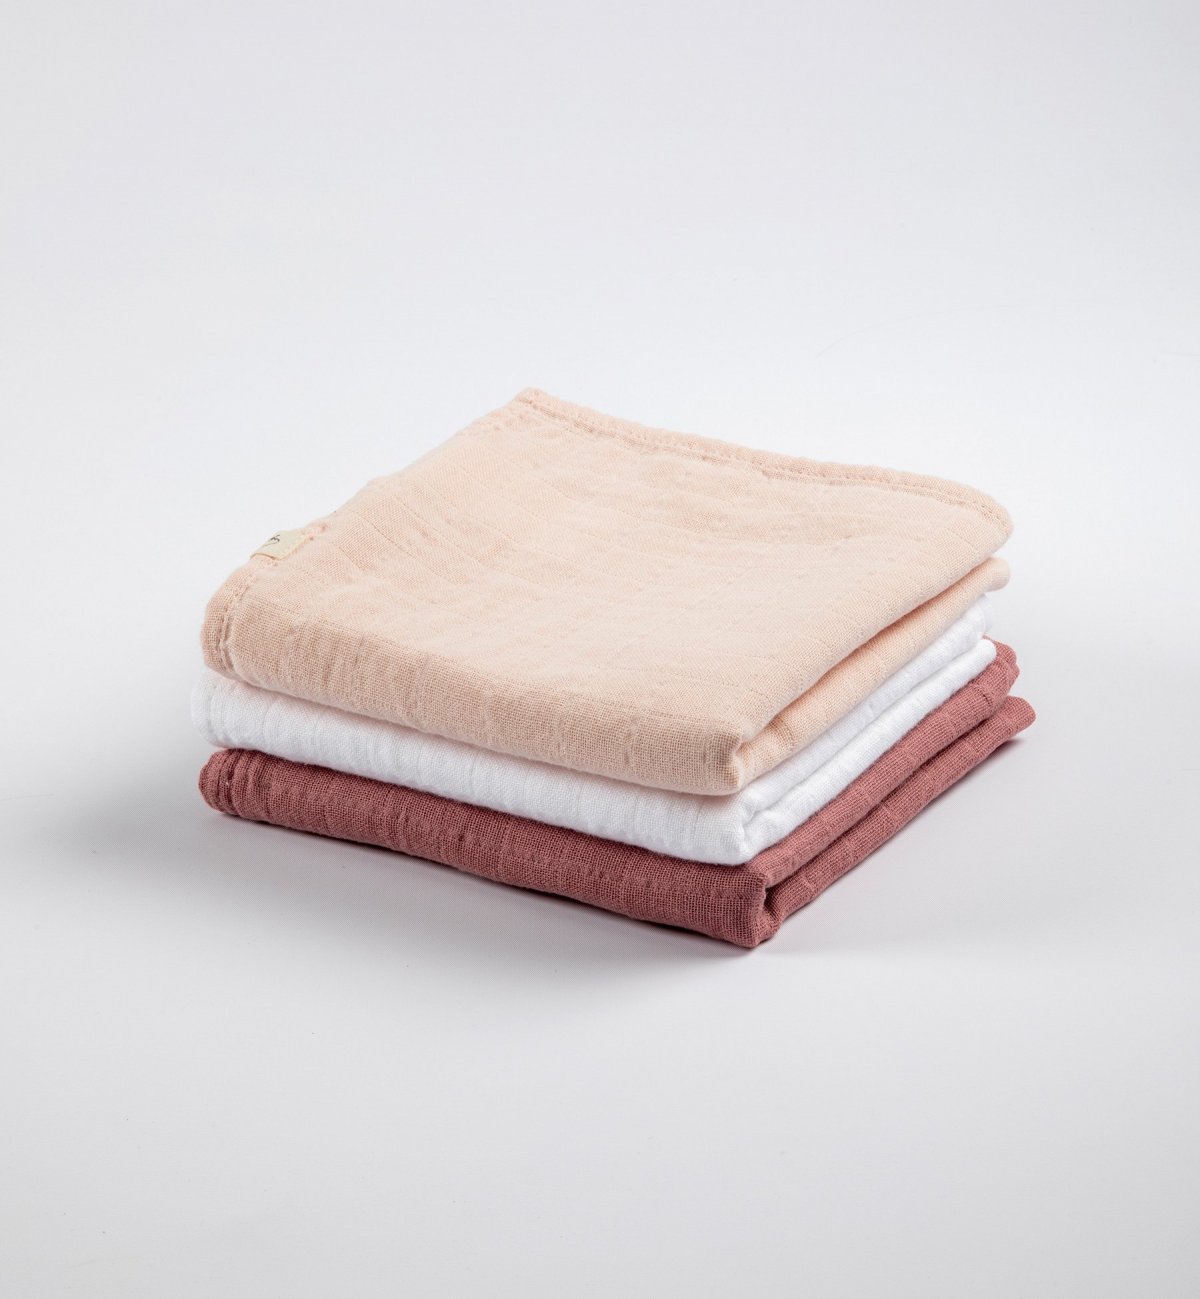 Set of 3 Organic Cotton diapers in plain colors 70x70 cm